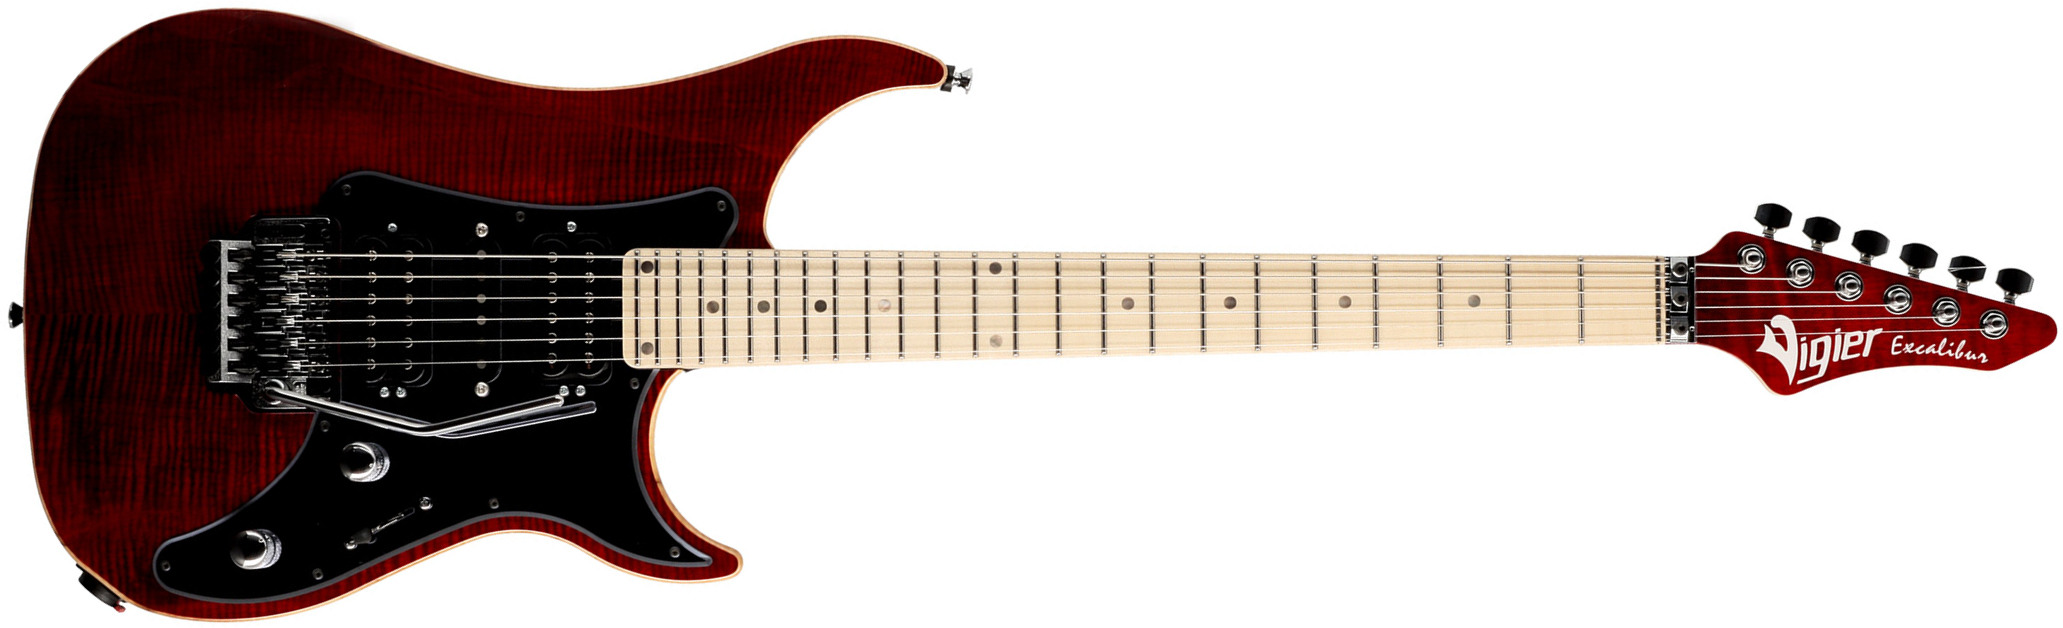 Vigier Excalibur Custom Hsh Fr Mn - Ruby - Str shape electric guitar - Main picture